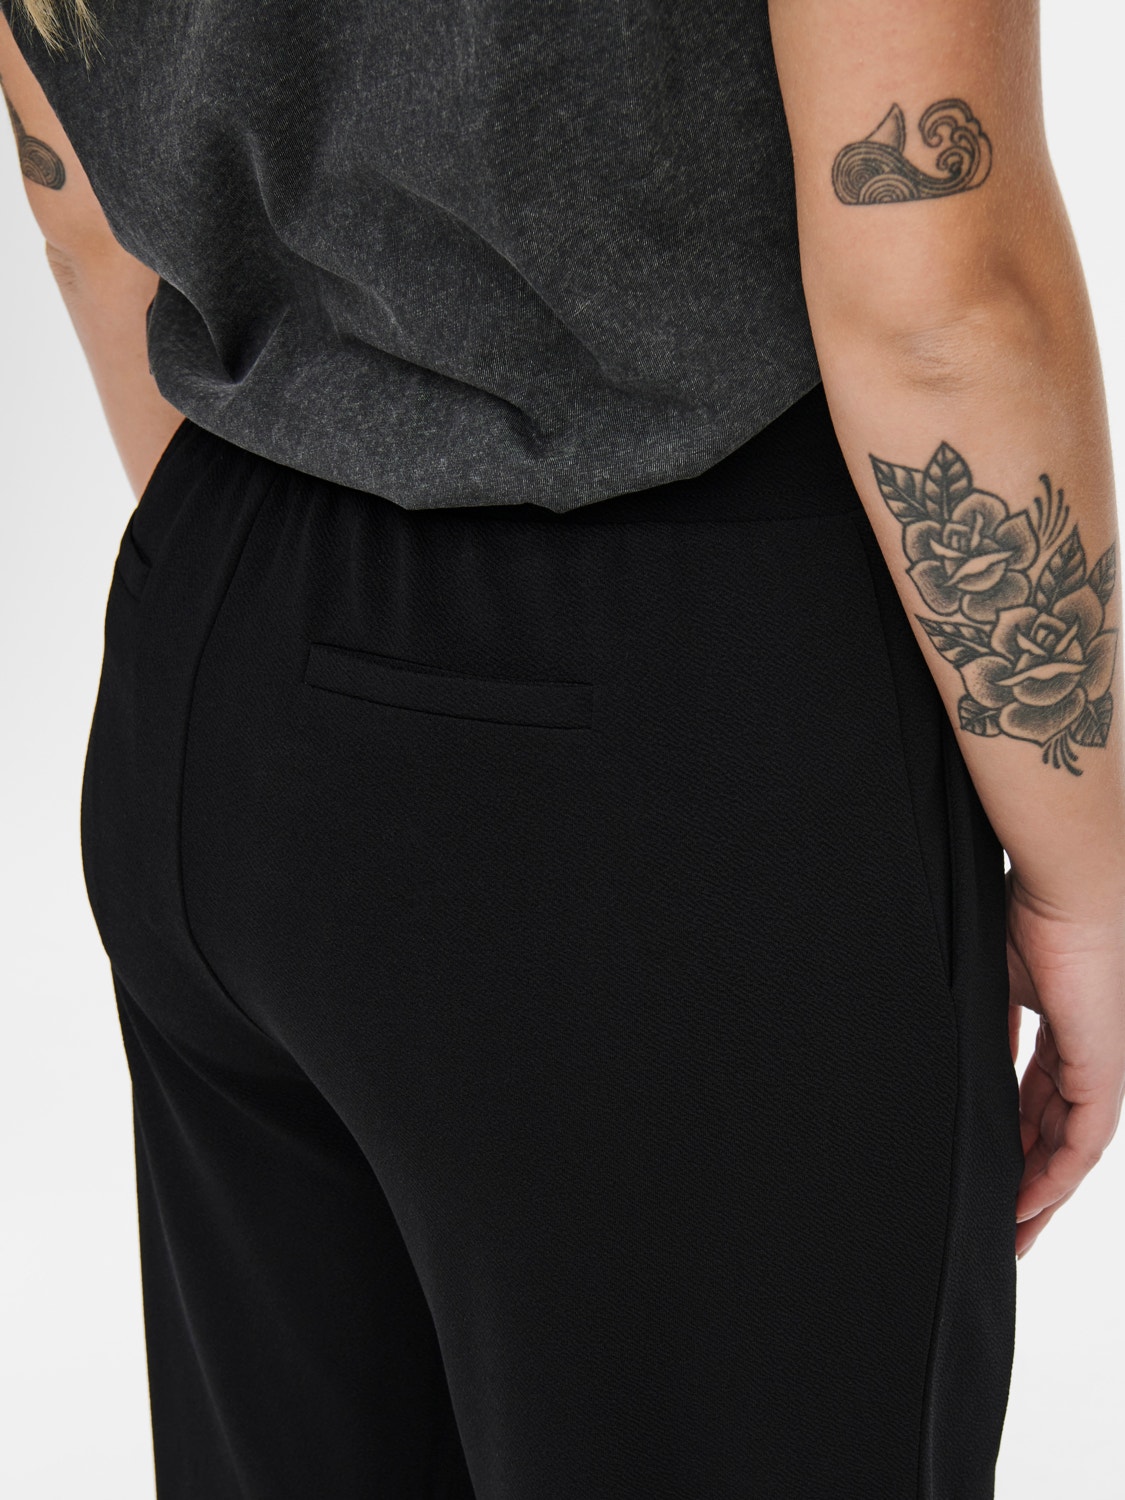 ONLY Tobilleros en tallas grandes Pantalones -Black - 15247324